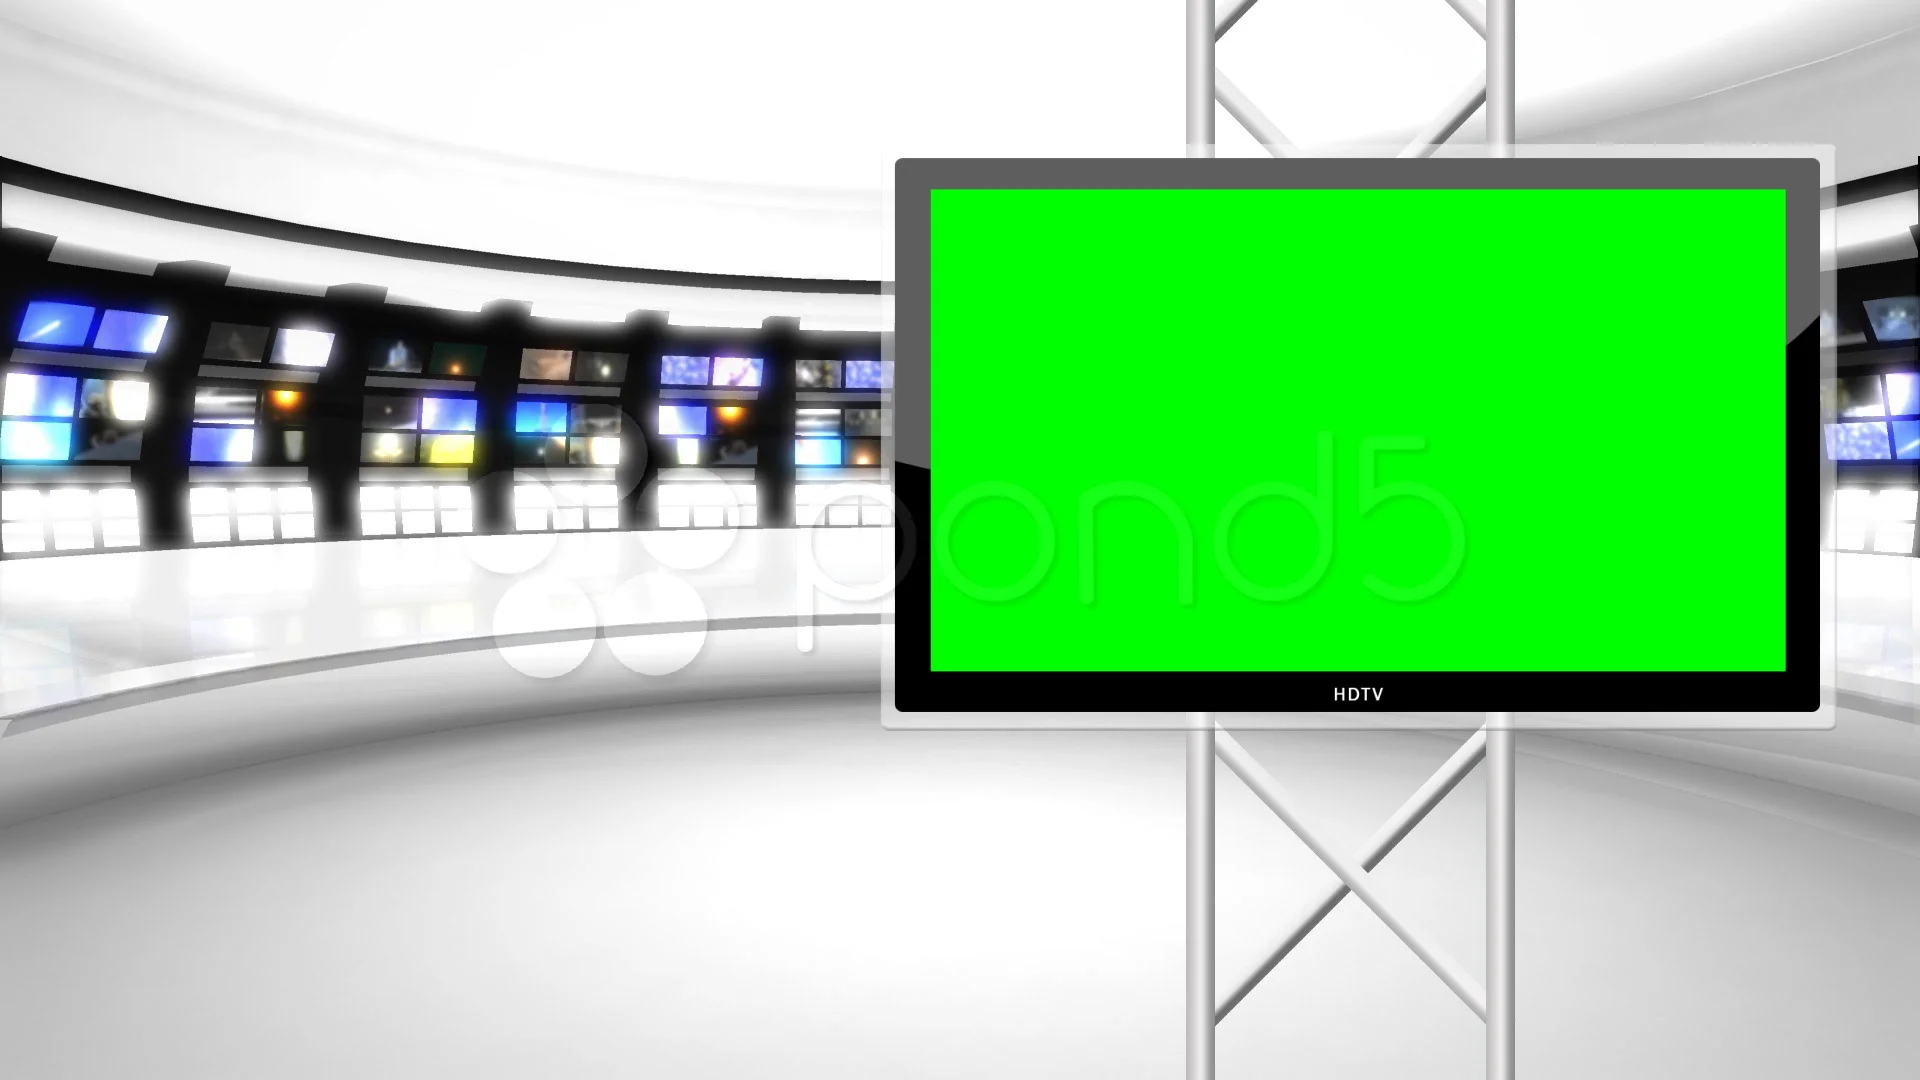 Virtual News Studio Green Screen Background  Stock Video  musgraphic  380994428